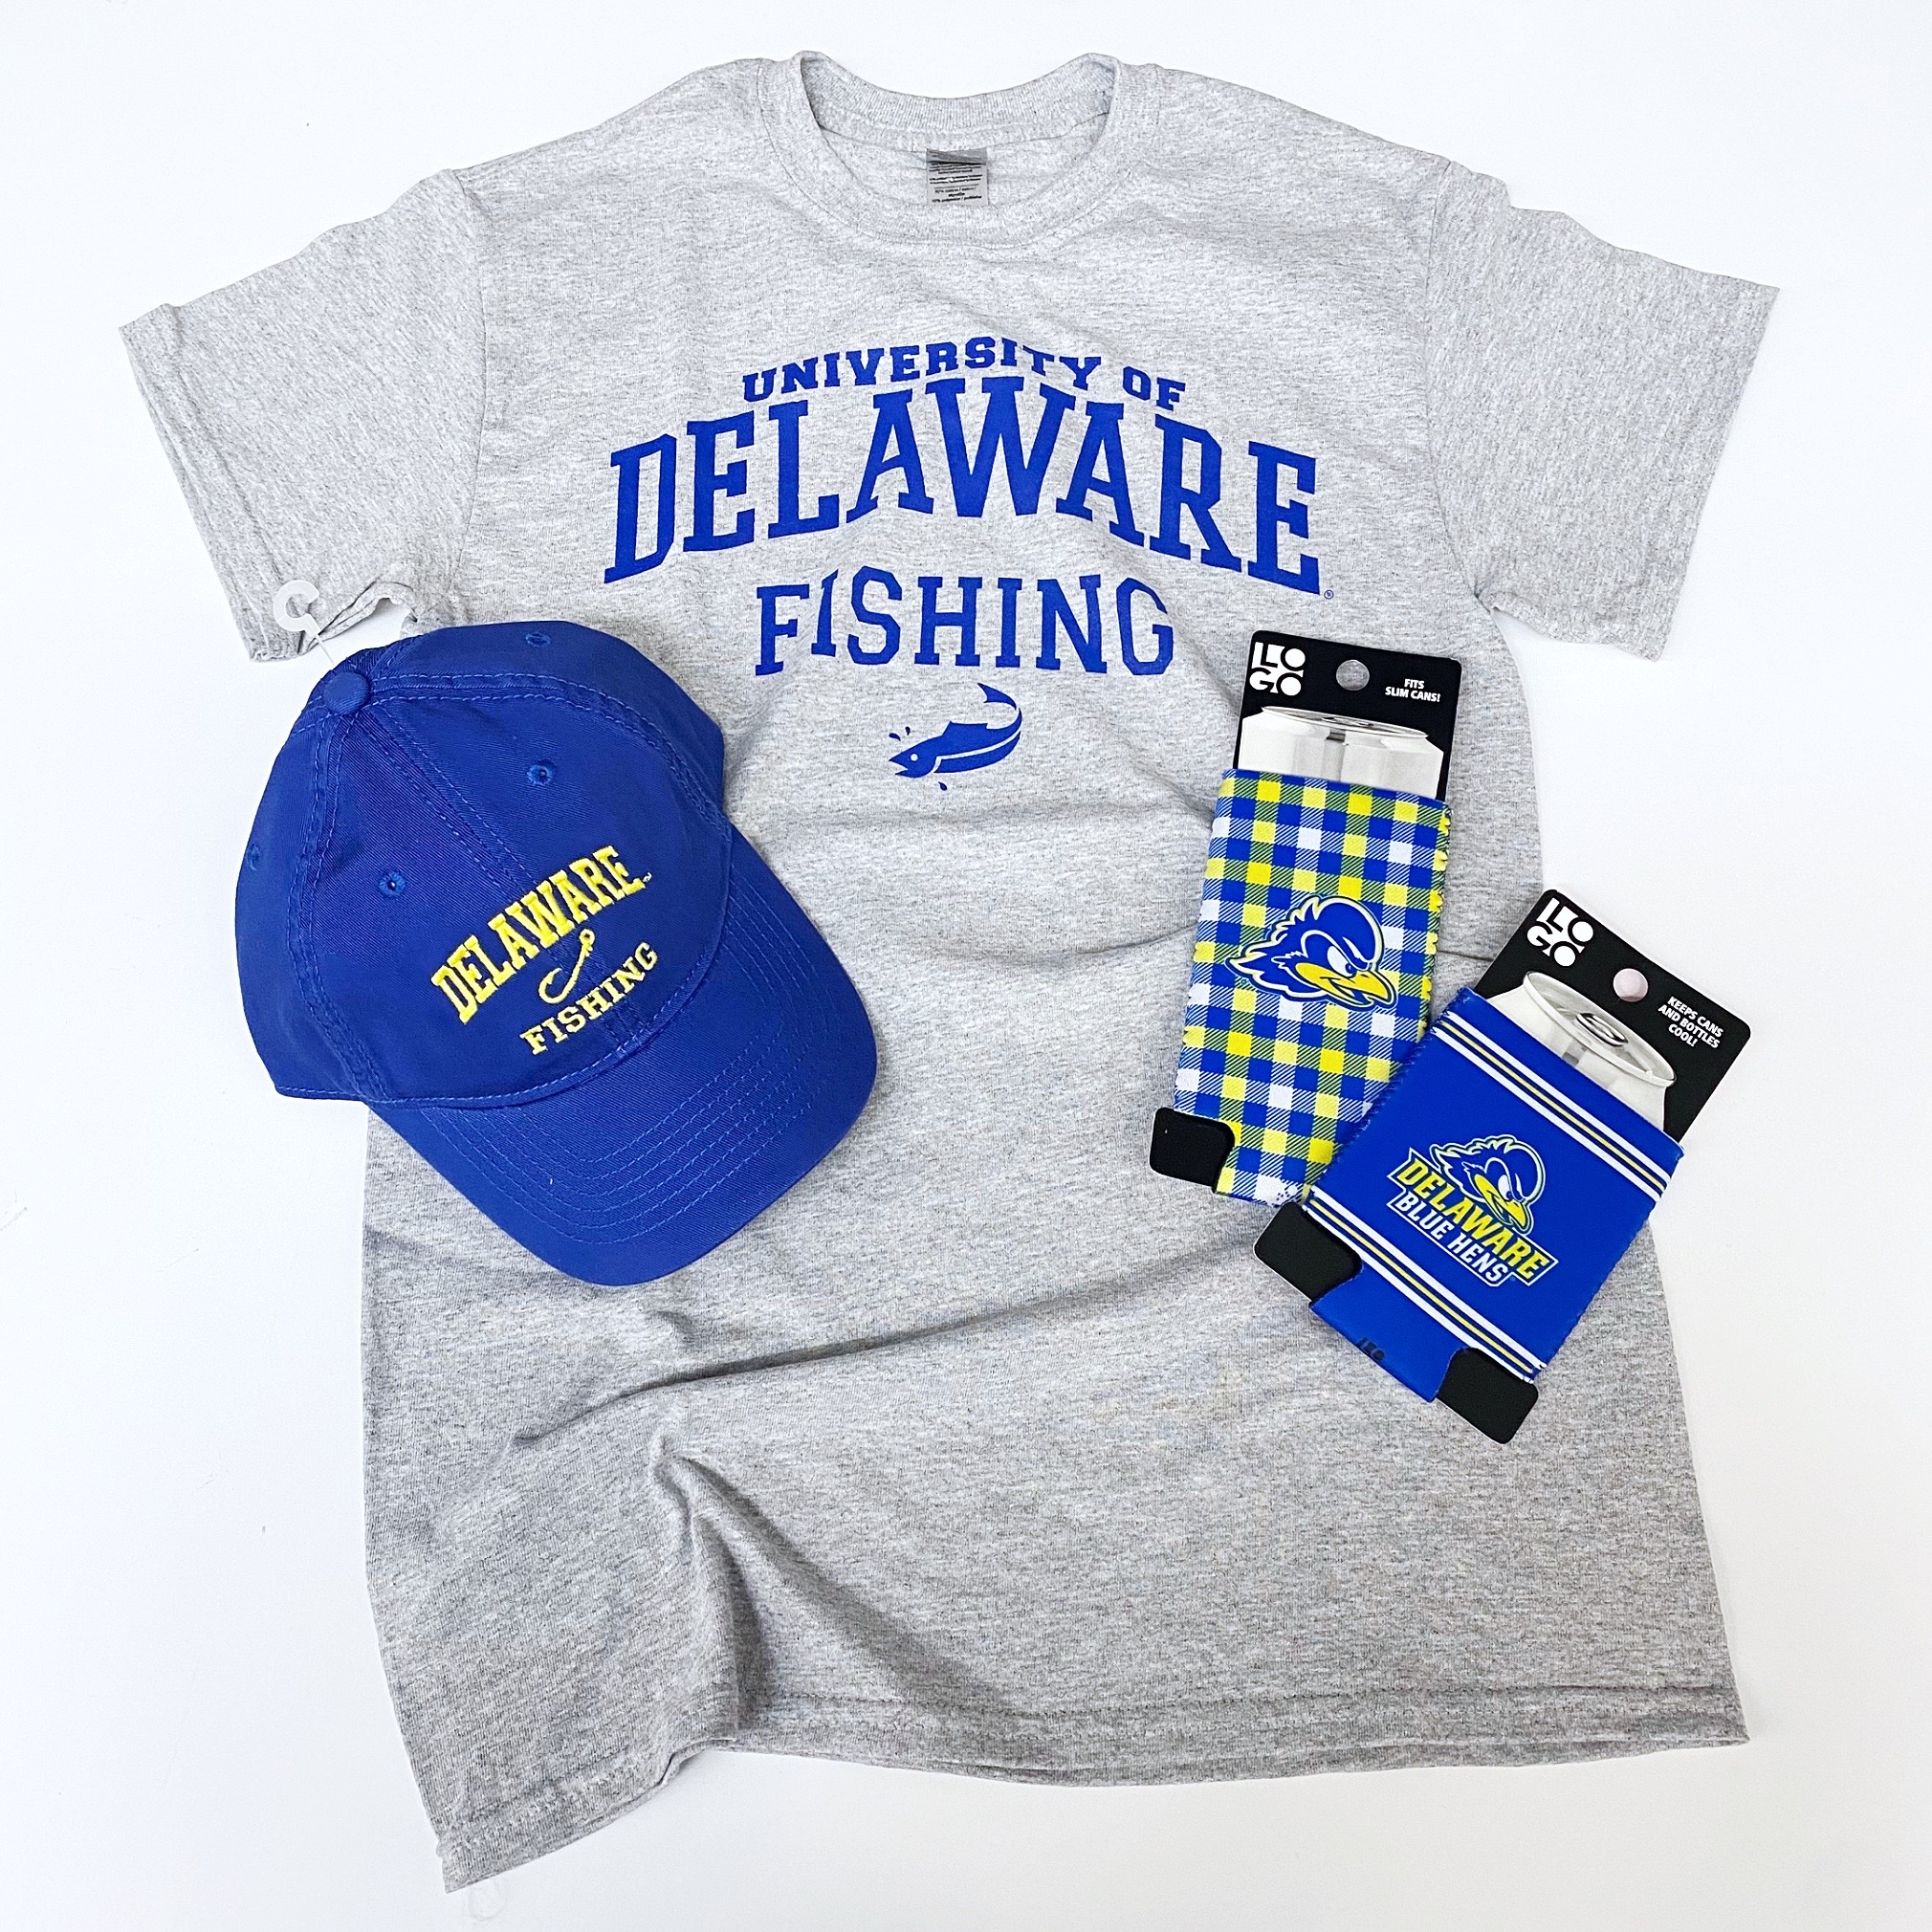 University of Delaware Fishing T-shirt - Oxford